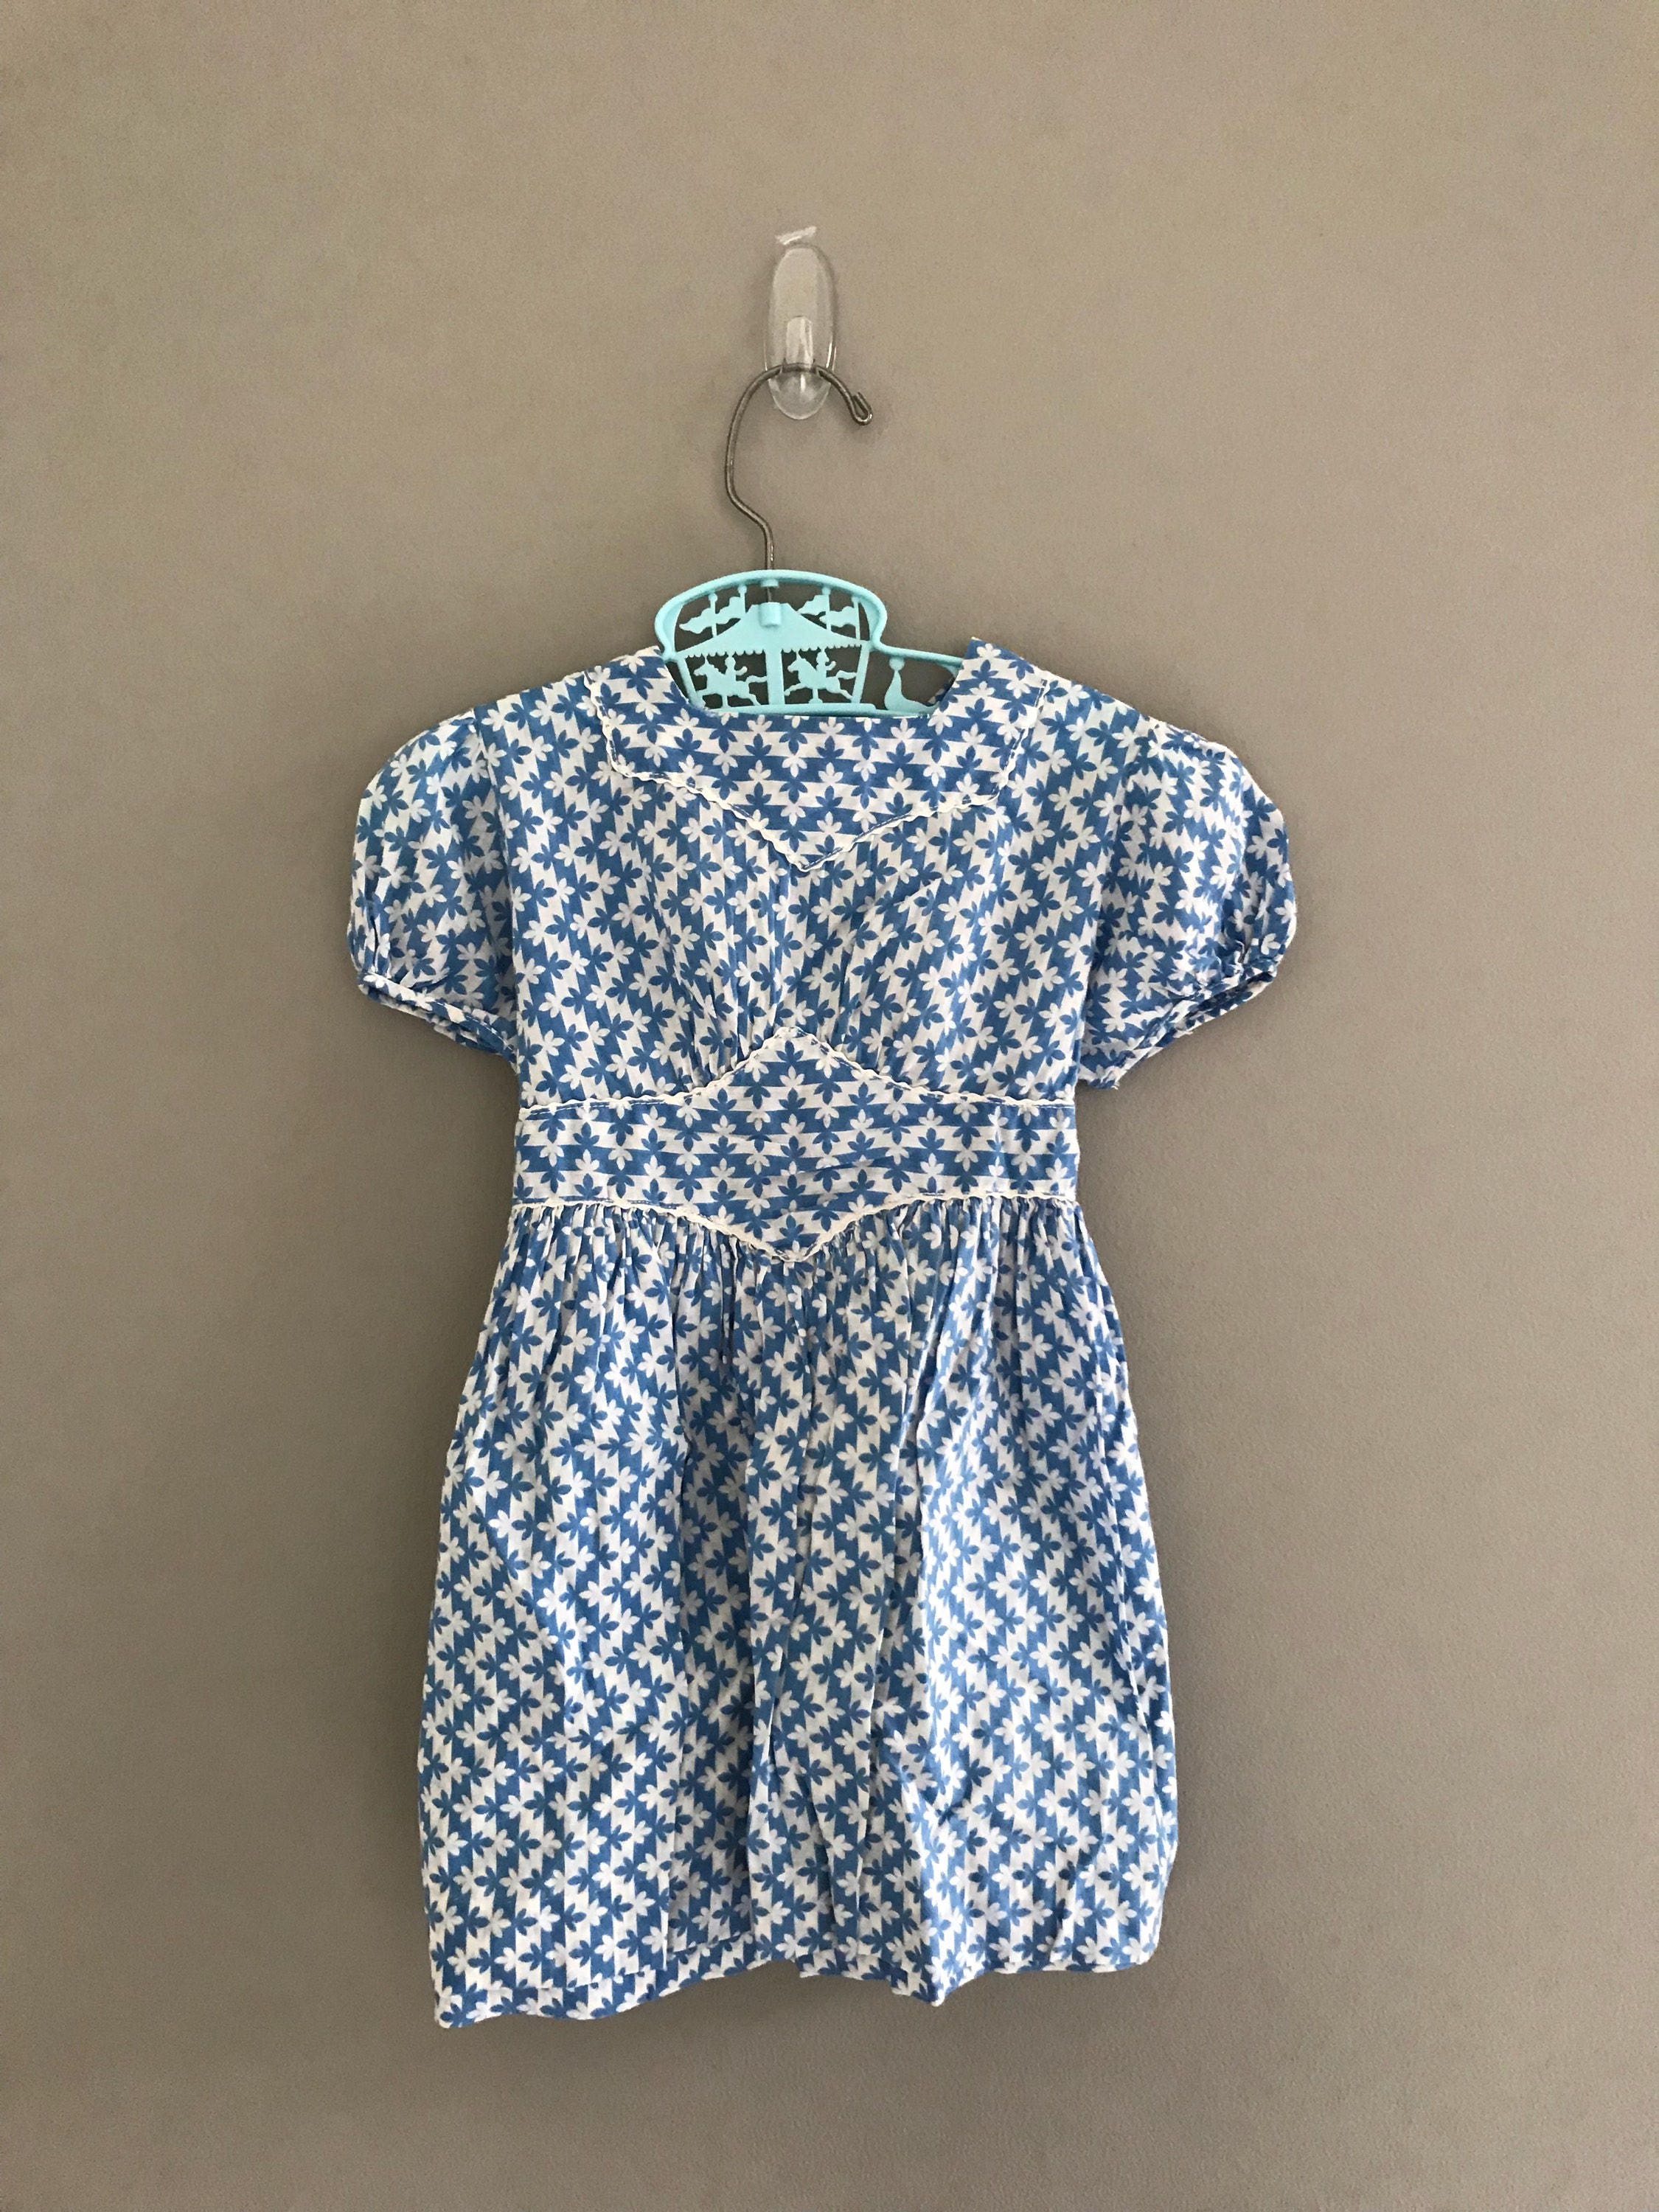 baby blue dress size 18